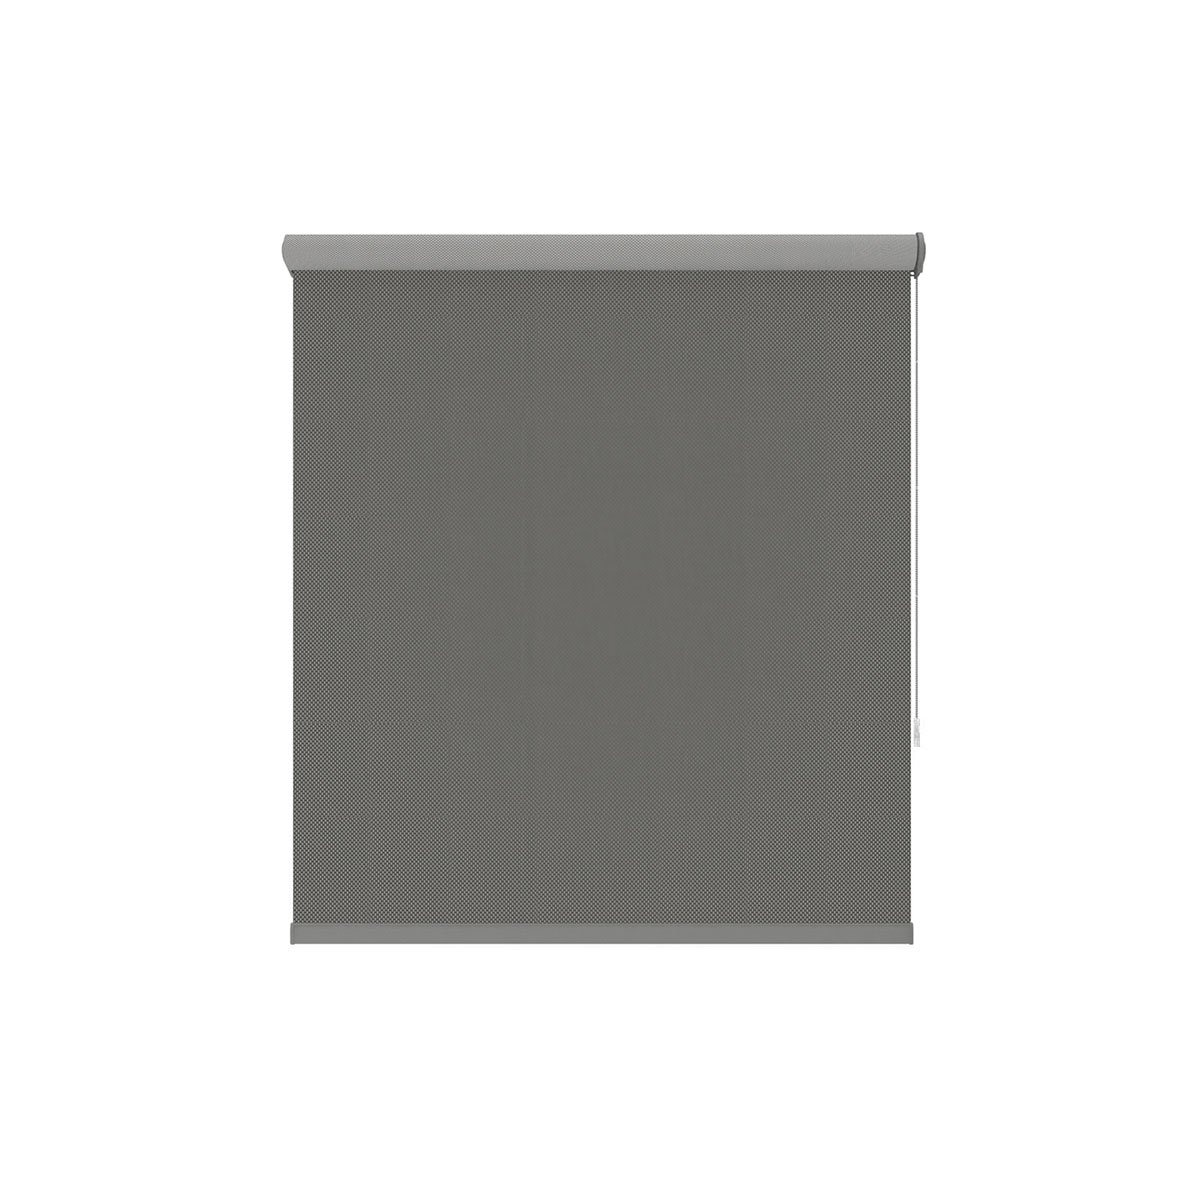 Persiana Enrollable Translucida Screen Phifer 4500 New 1.60 X 2.50 Granite Classic